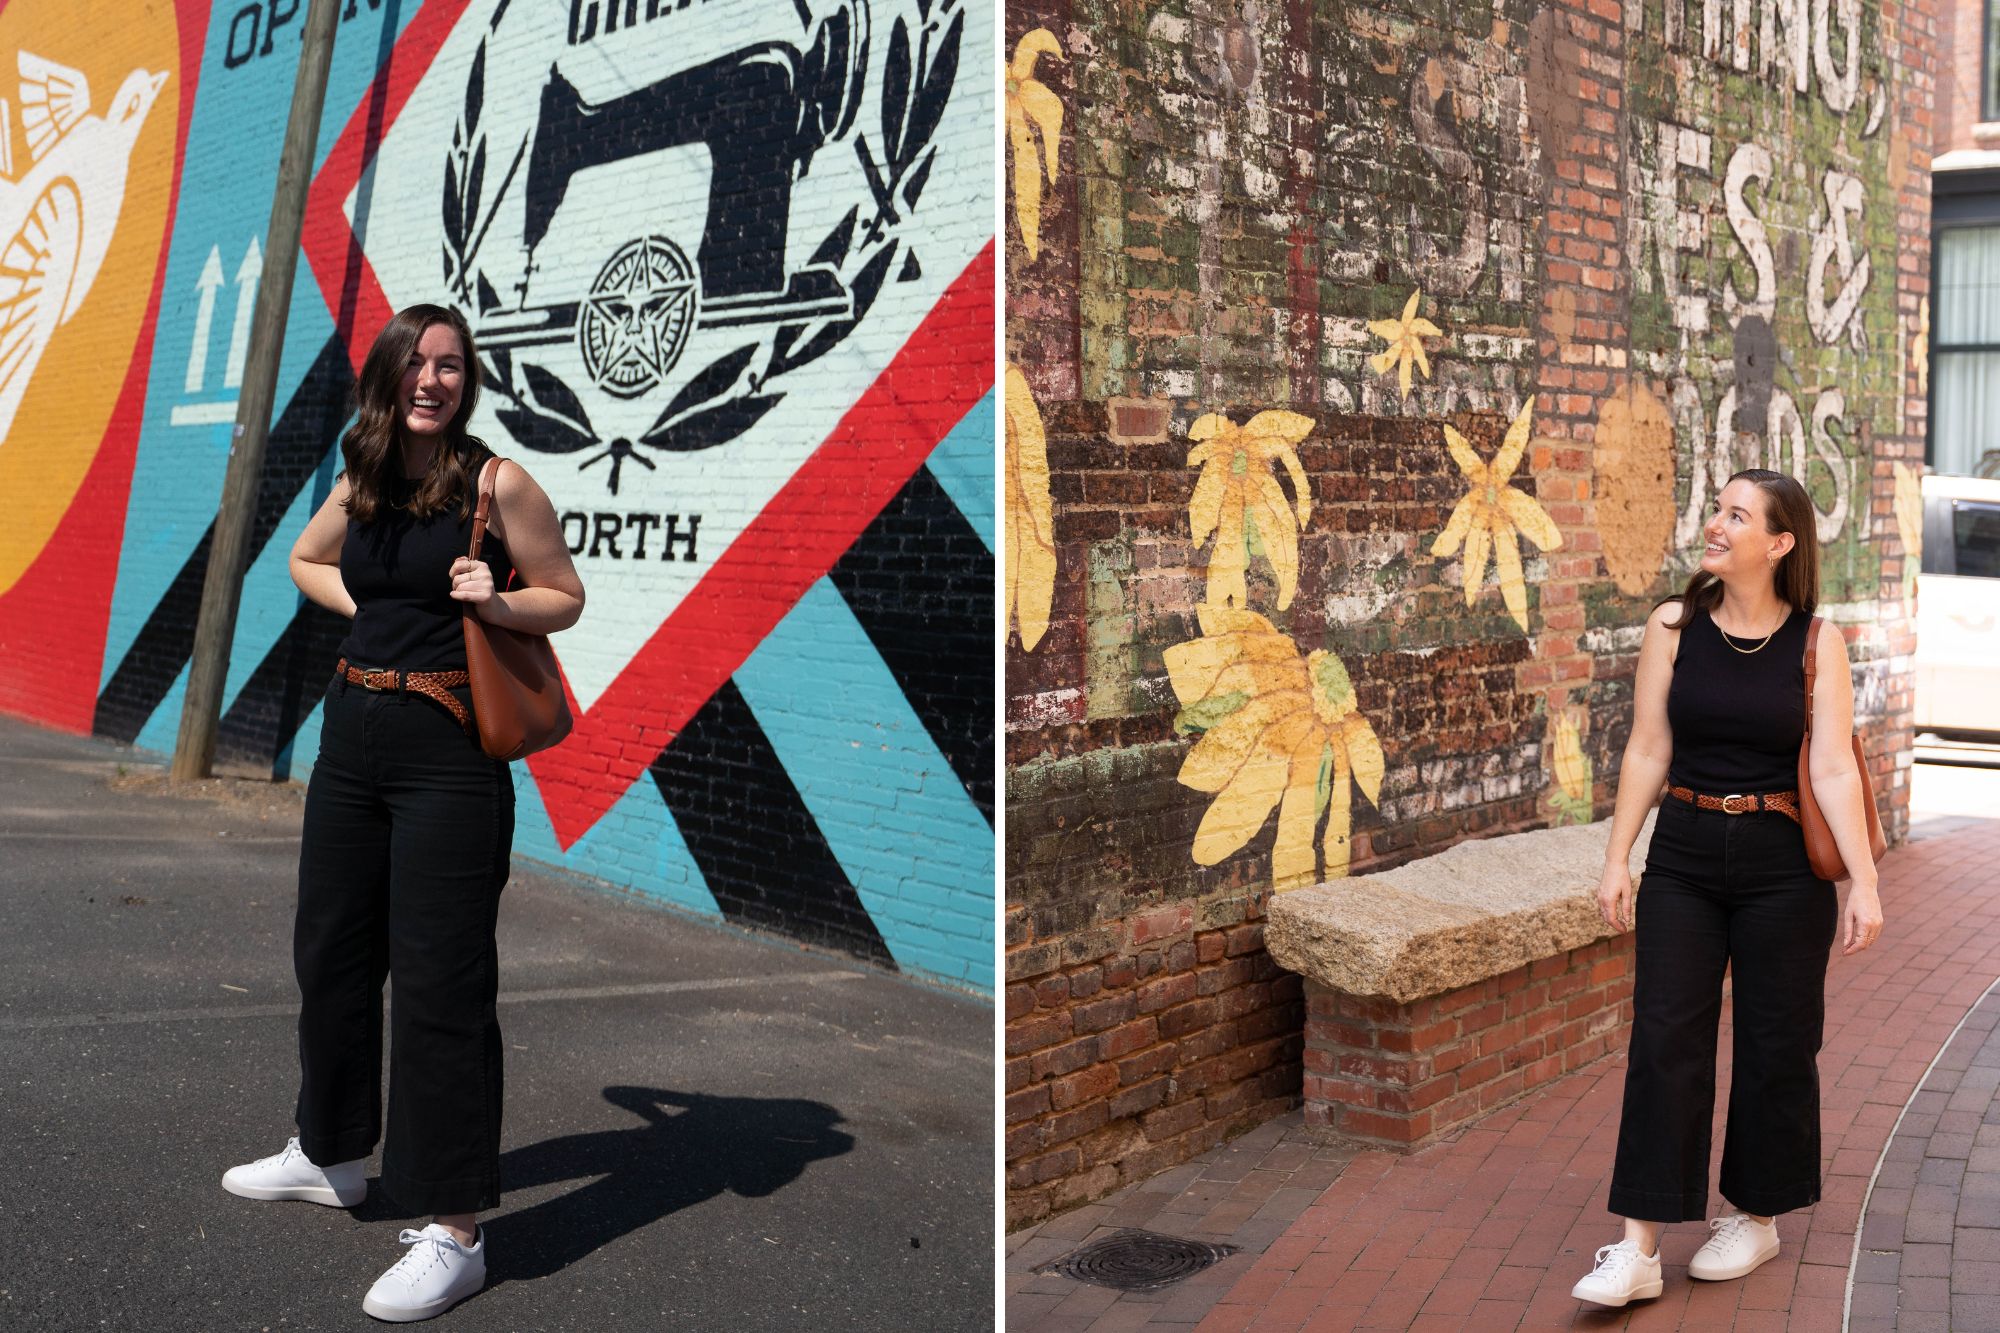 Alyssa stands in front of two murals in Rock Hill